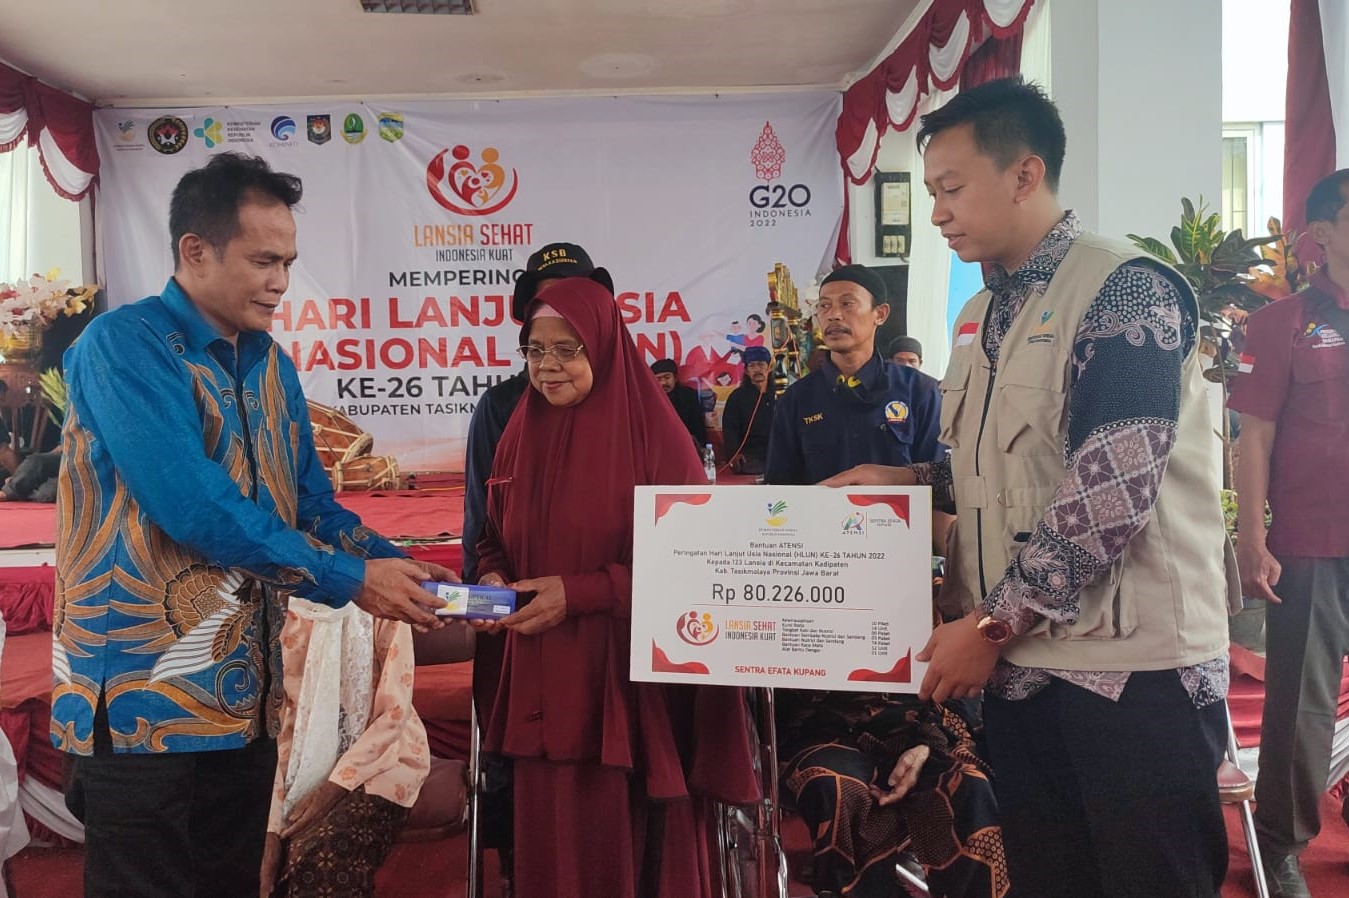 Kupang "Efata" Center Celebrates 26th National Elderly Day in Tasikmalaya